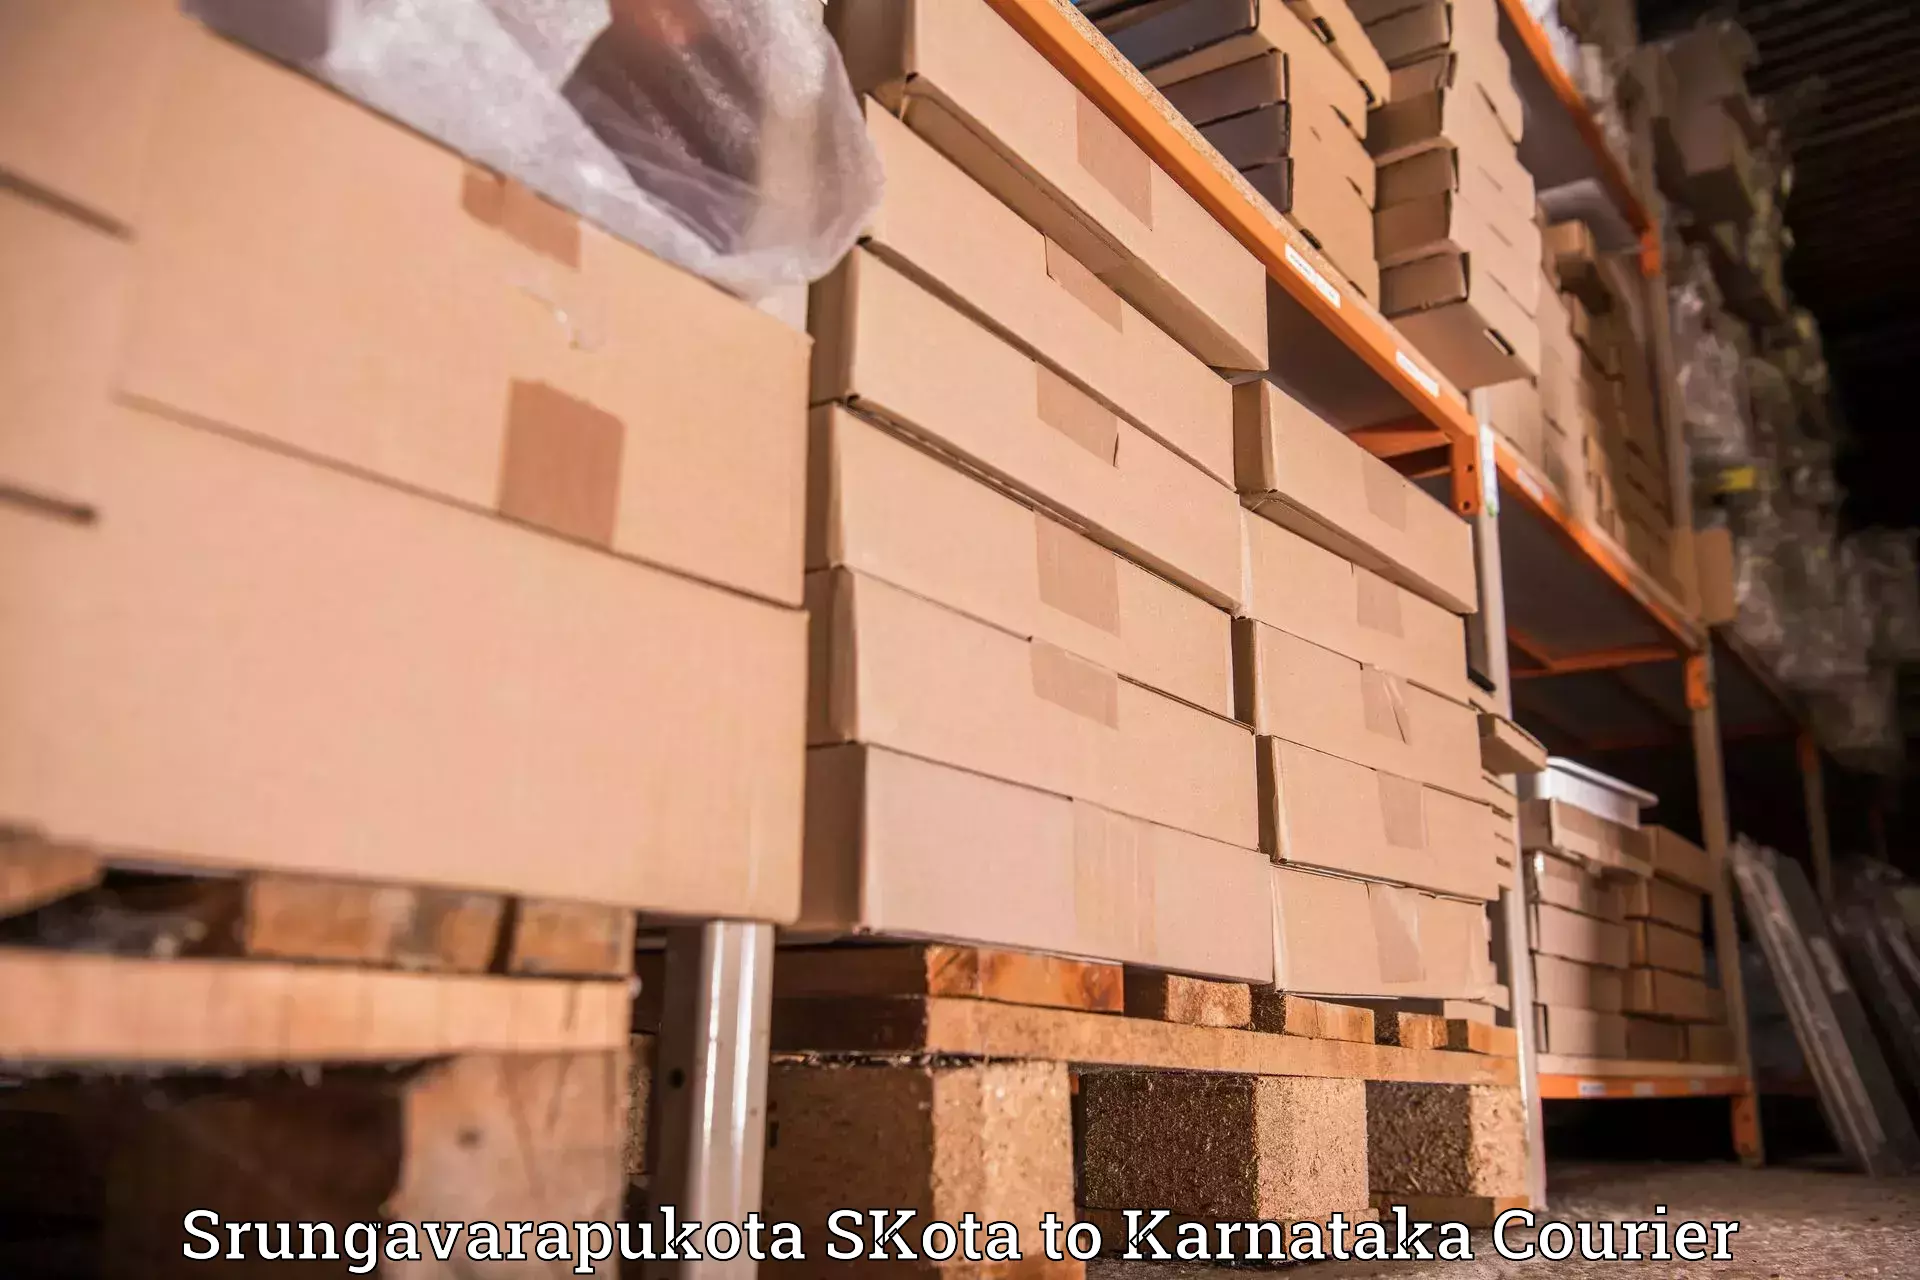 Reliable delivery network Srungavarapukota SKota to Bangalore